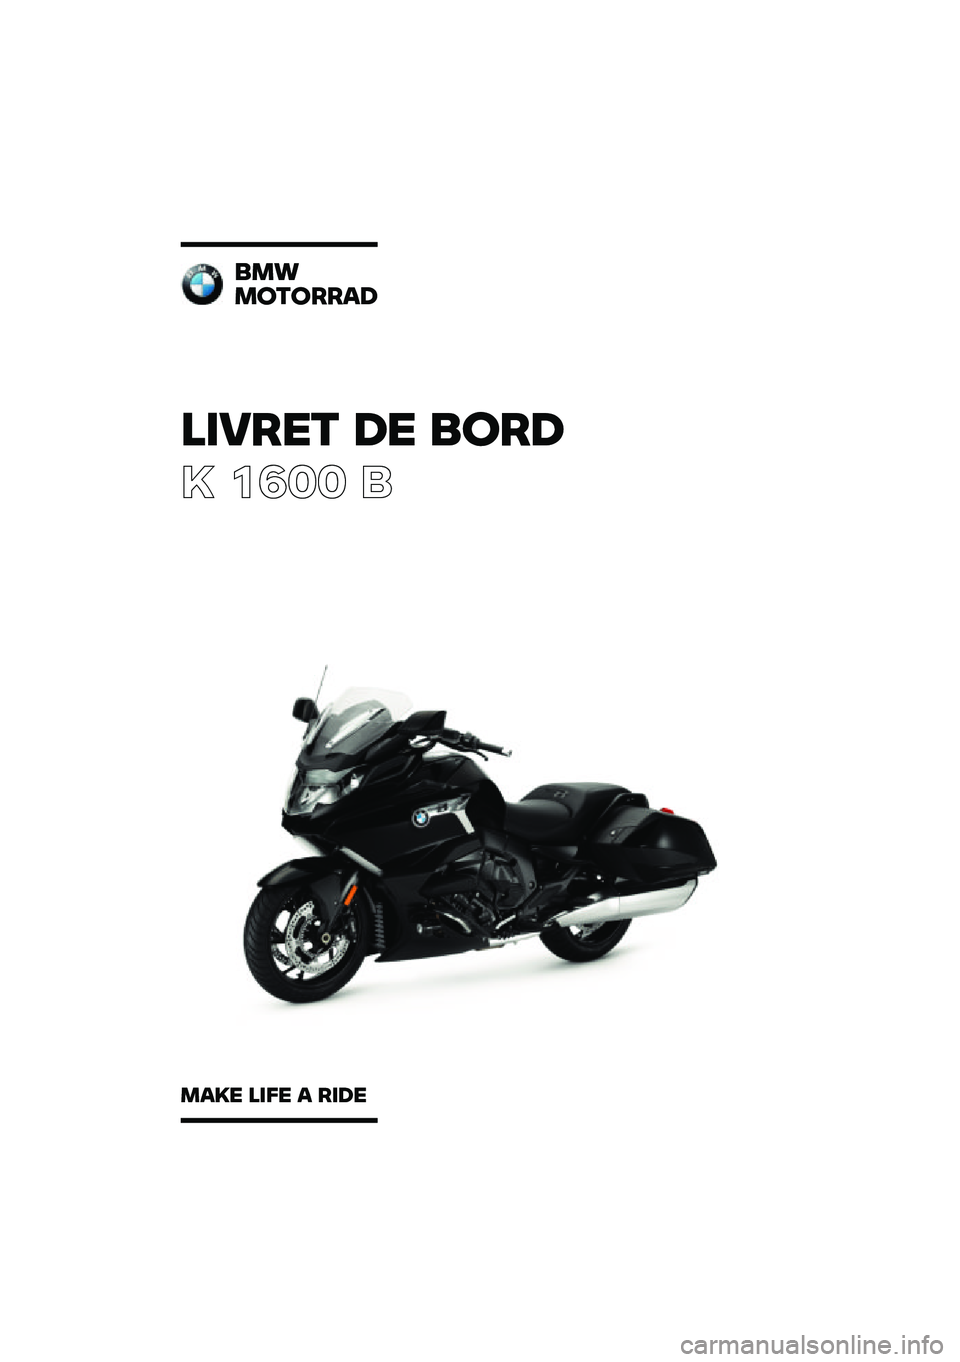 BMW MOTORRAD K 1600 B 2020  Livret de bord (in French) ������ �\b� �	�
��\b
� ���� �	
�	��\f
��
��
���
�\b
��
�� ���� �
 ���\b� 